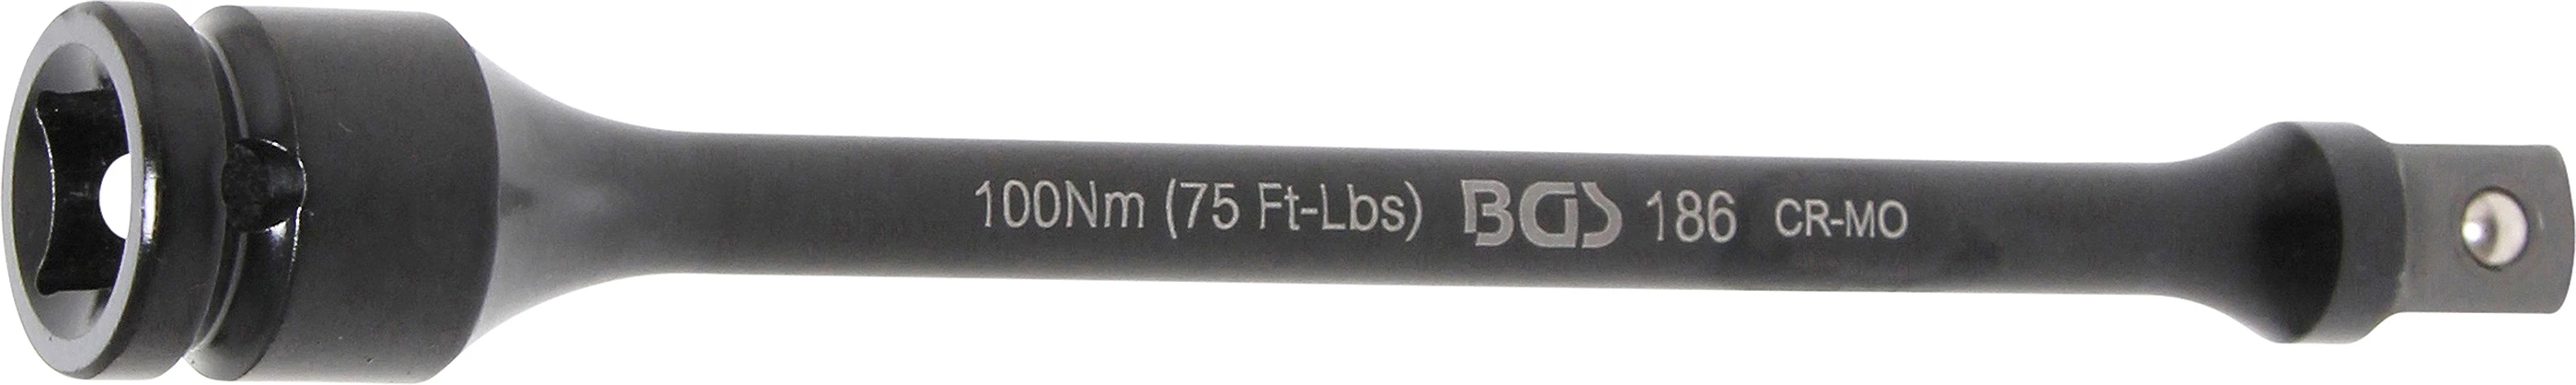 Torsionsstab - 12,5 mm (1/2") - 100 Nm